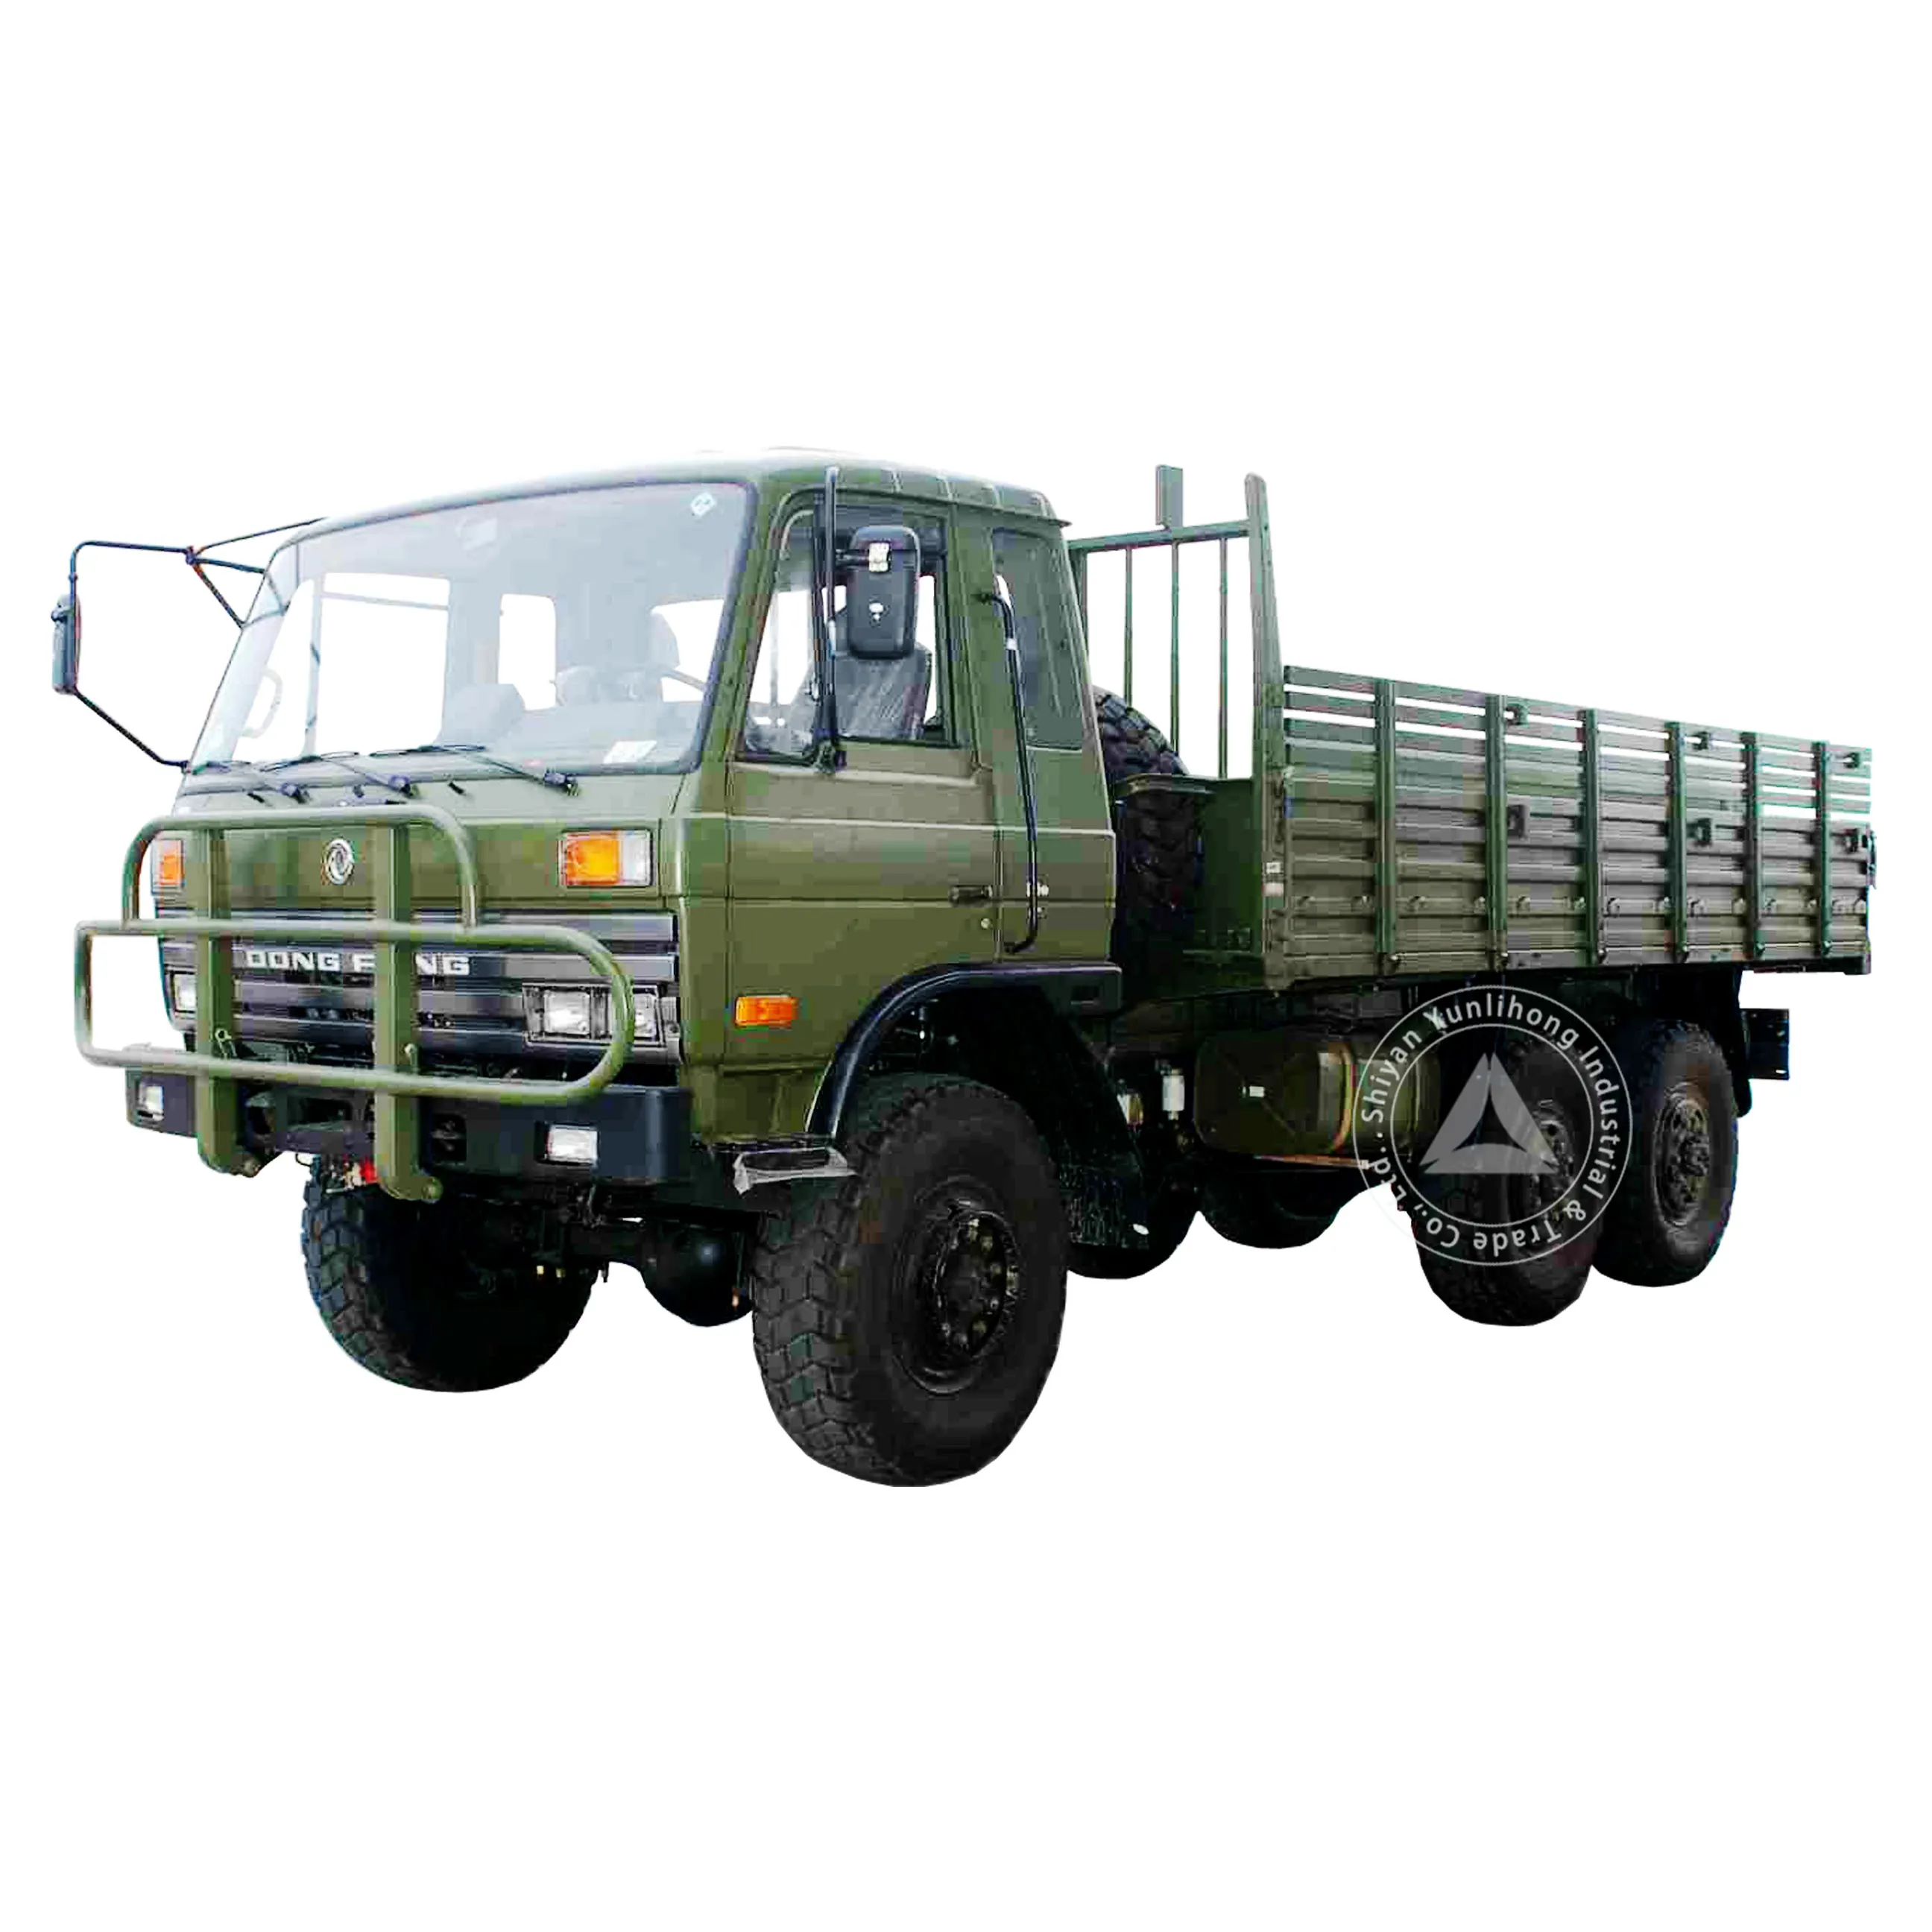 Dongfeng 6x6 Militärs ol daten Träger Armee Offroad Trucks zu verkaufen